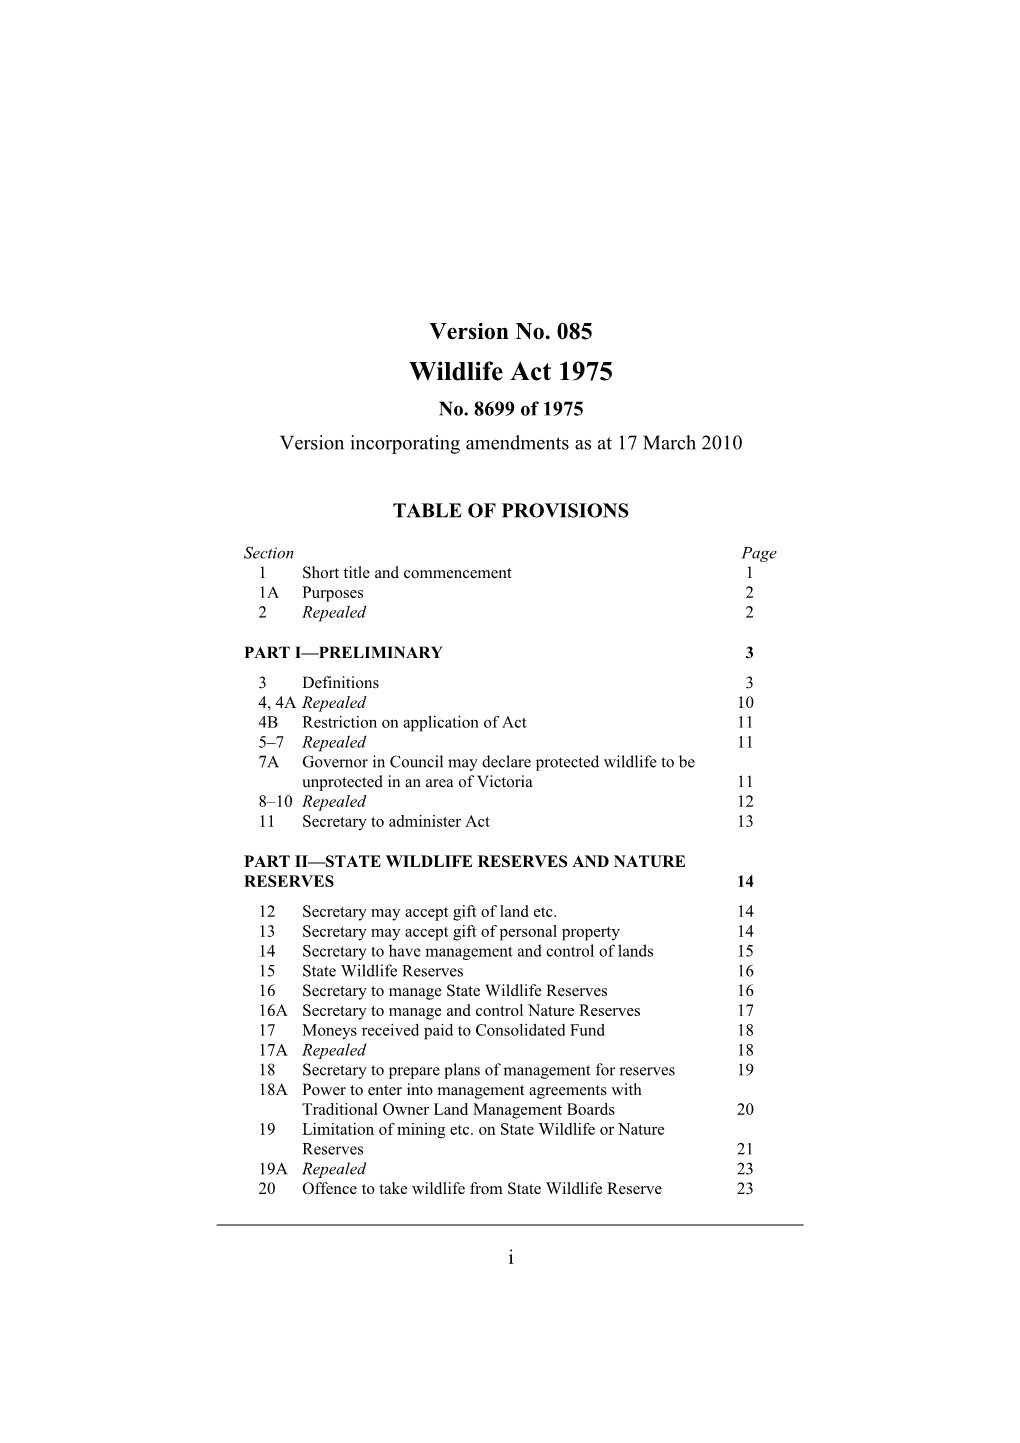 Version Incorporating Amendments As at 17 March 2010